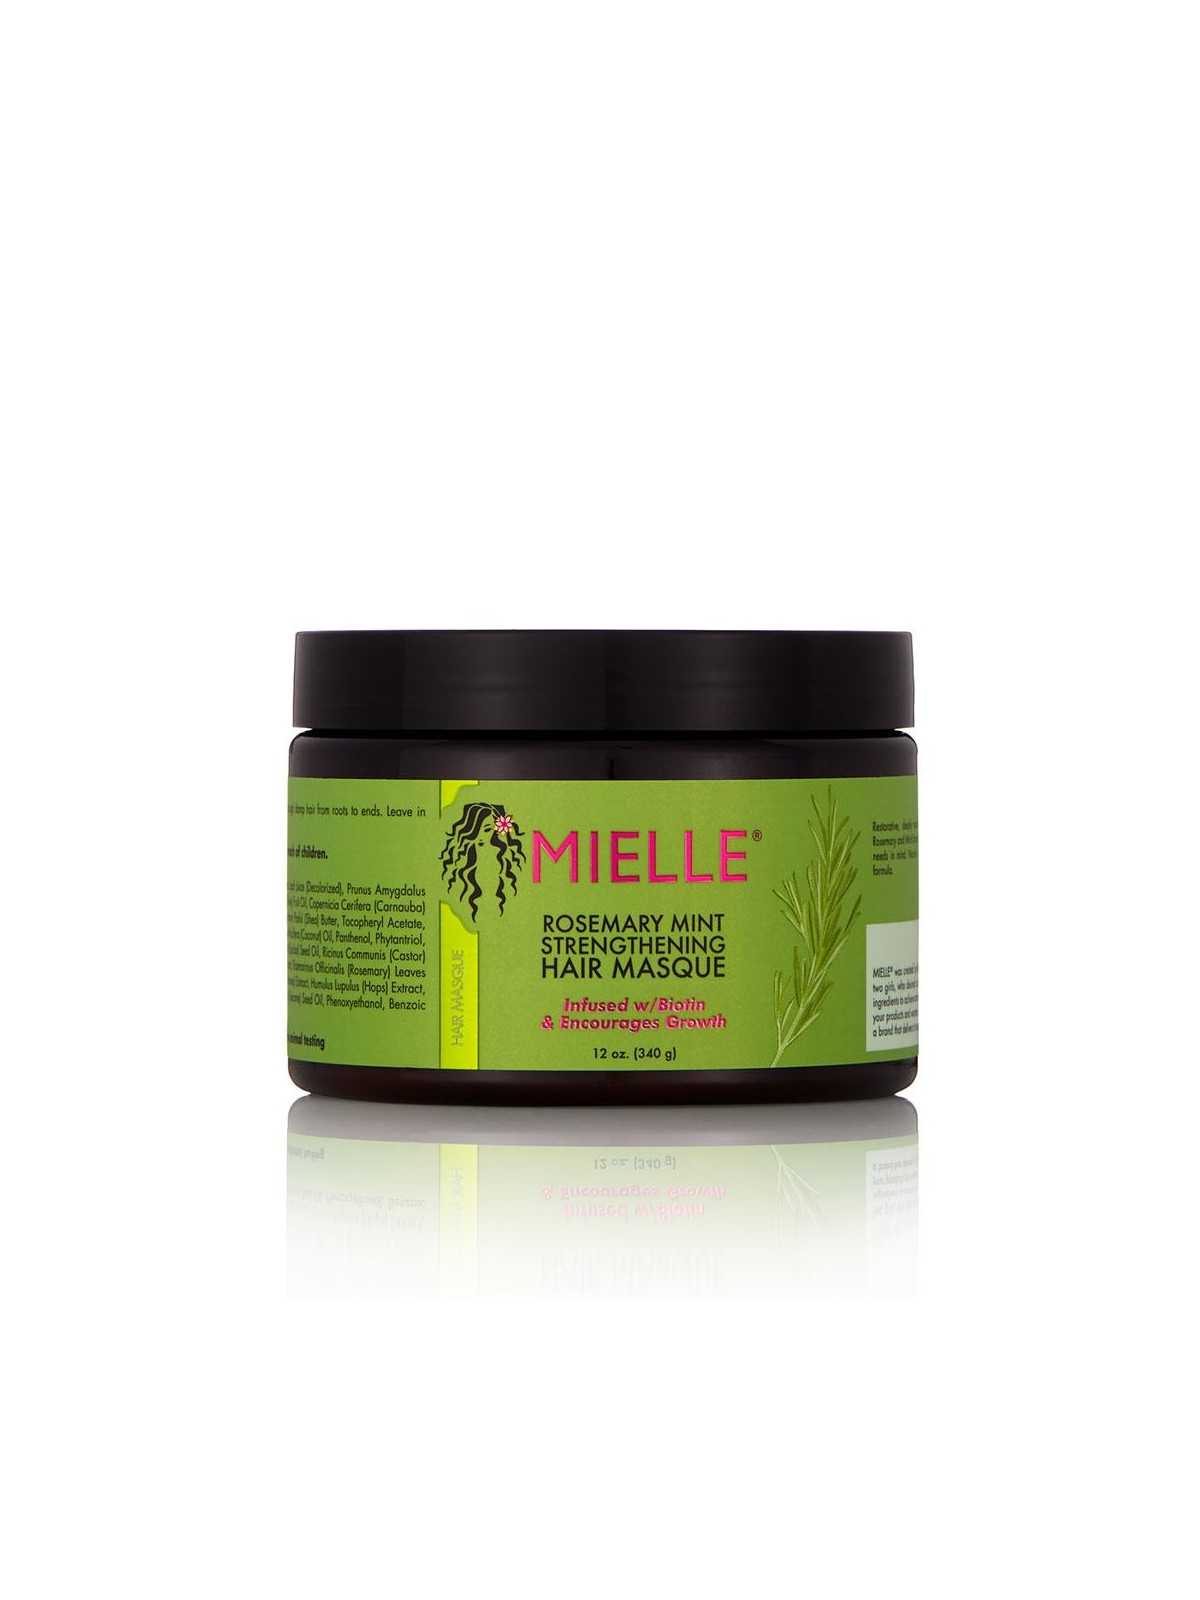 Comprar Mielle Organics Rosemary Mint Strengthening Hair Masque 340g en Método CURLY por sólo 16,37 € o un precio específico de 12,28 € en Thalie Care